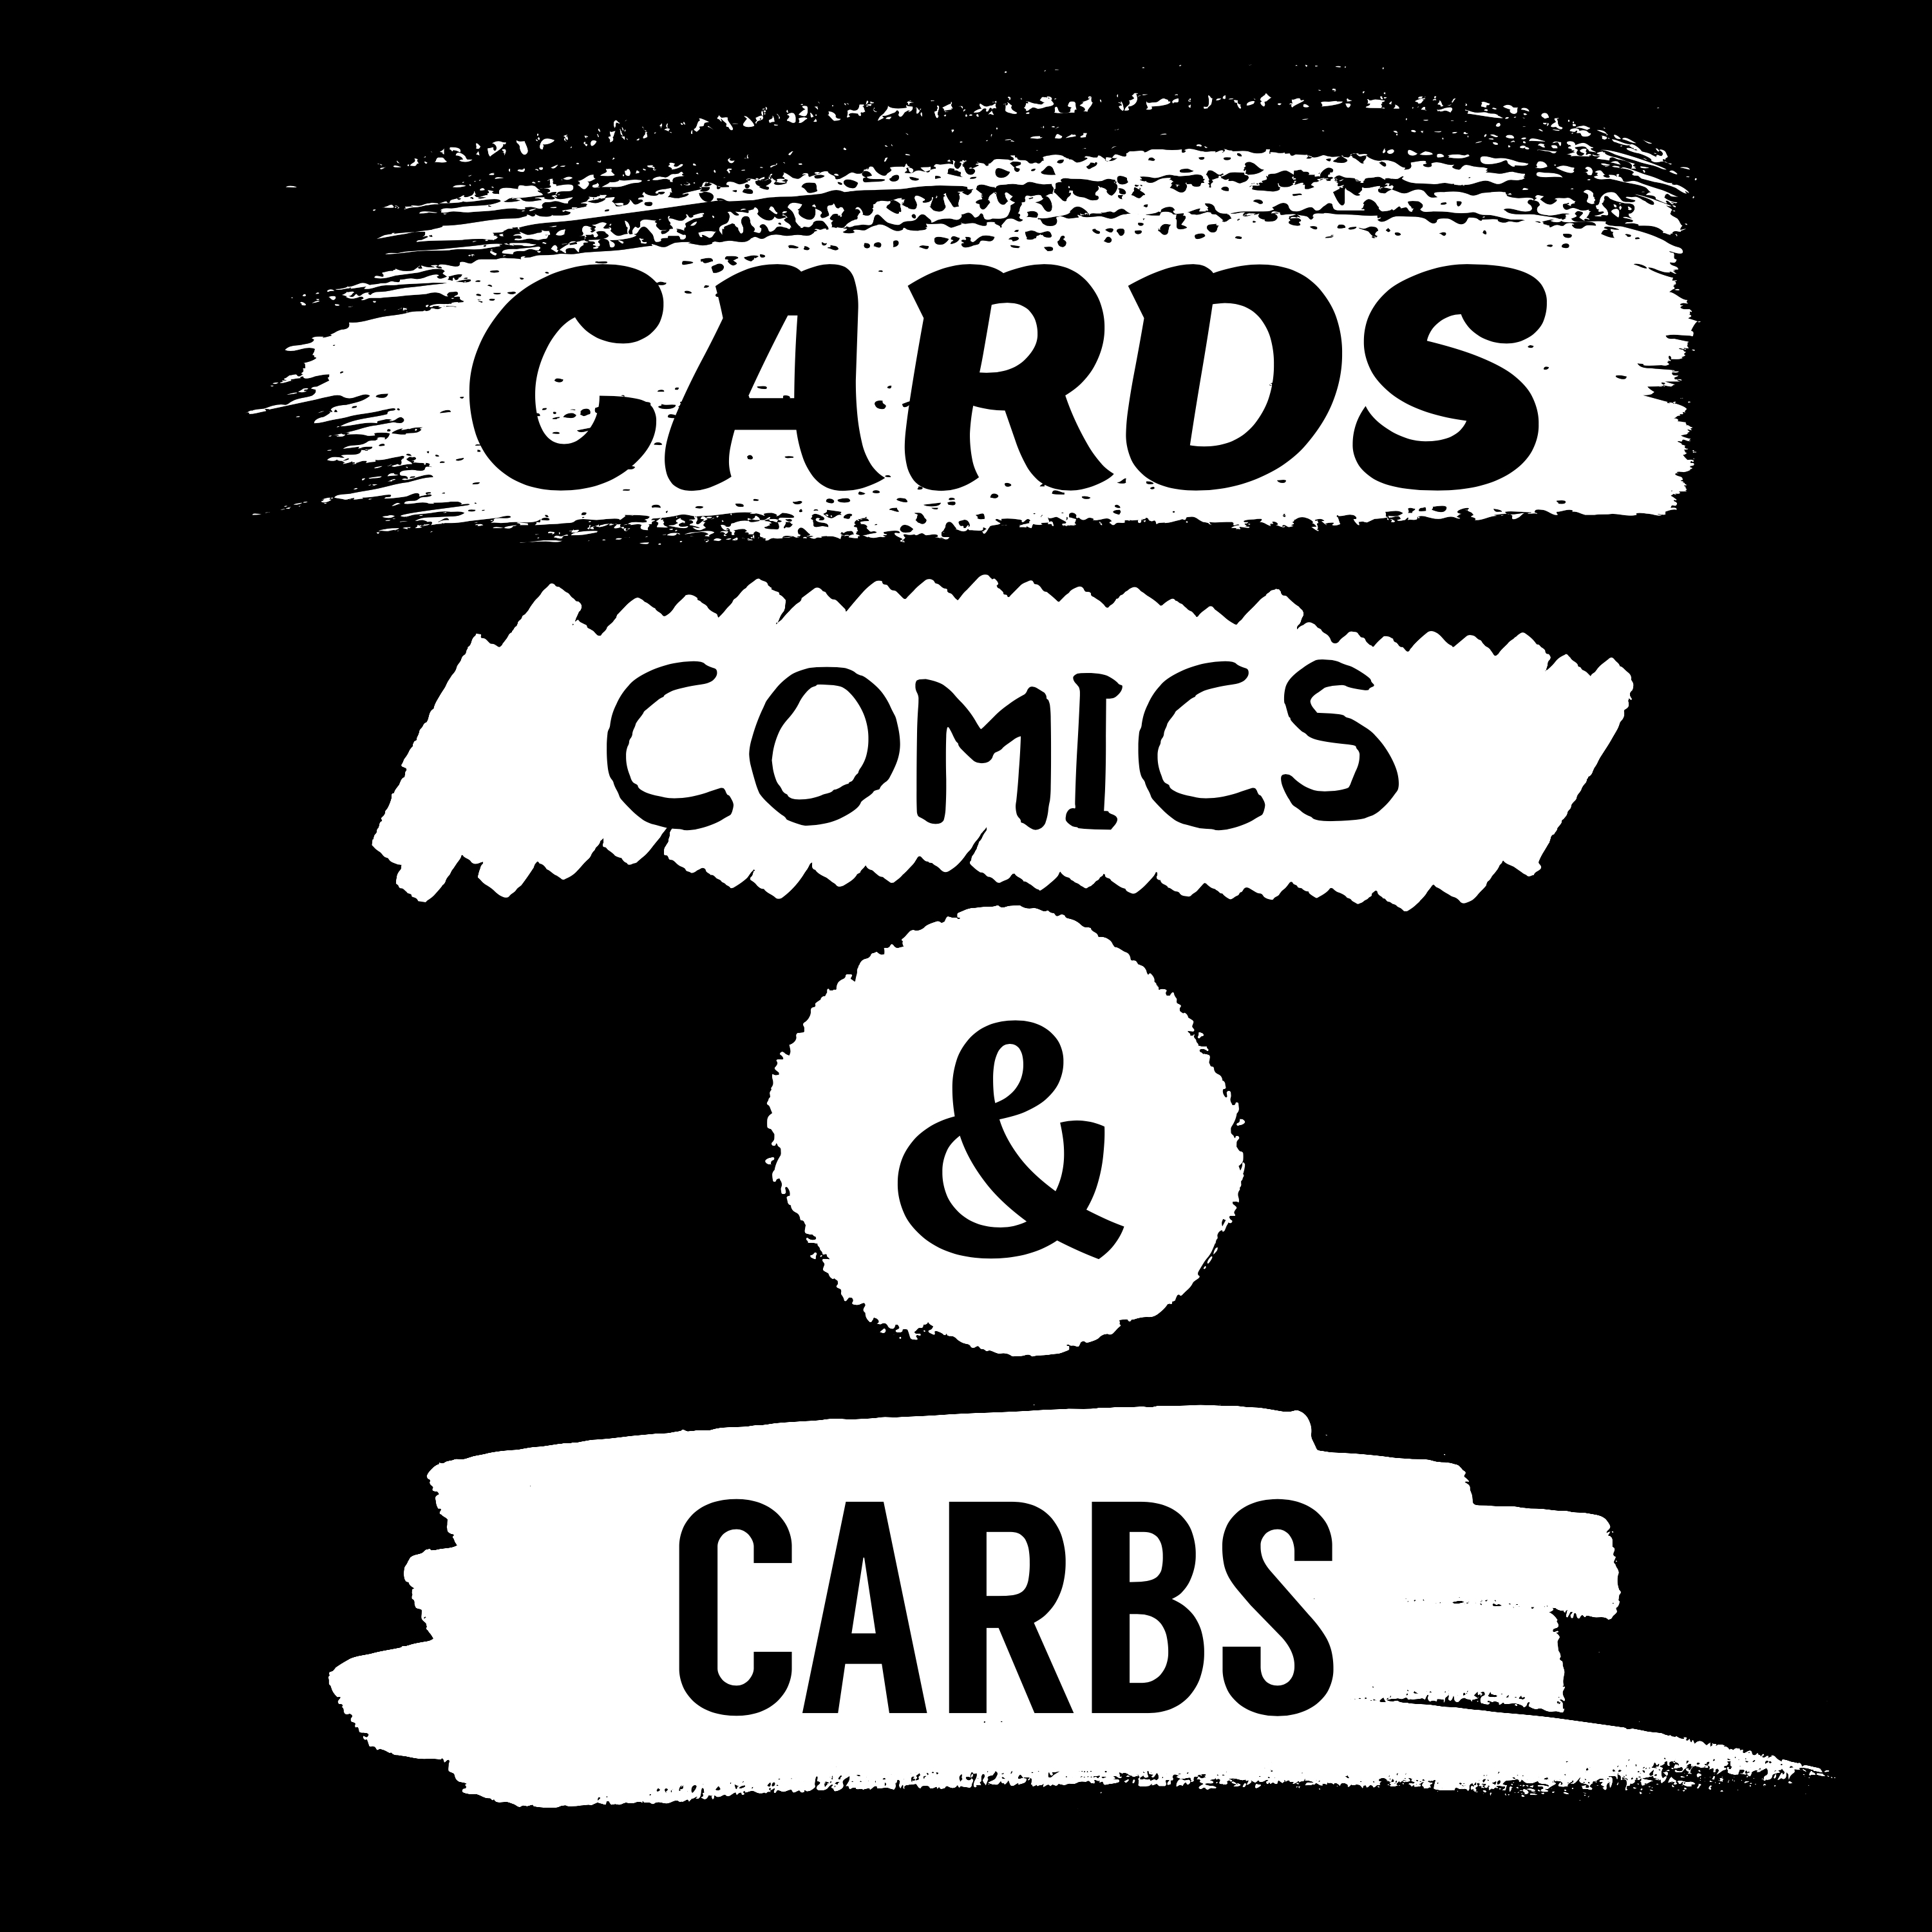 Artwork for Cards, Comics & Carbs